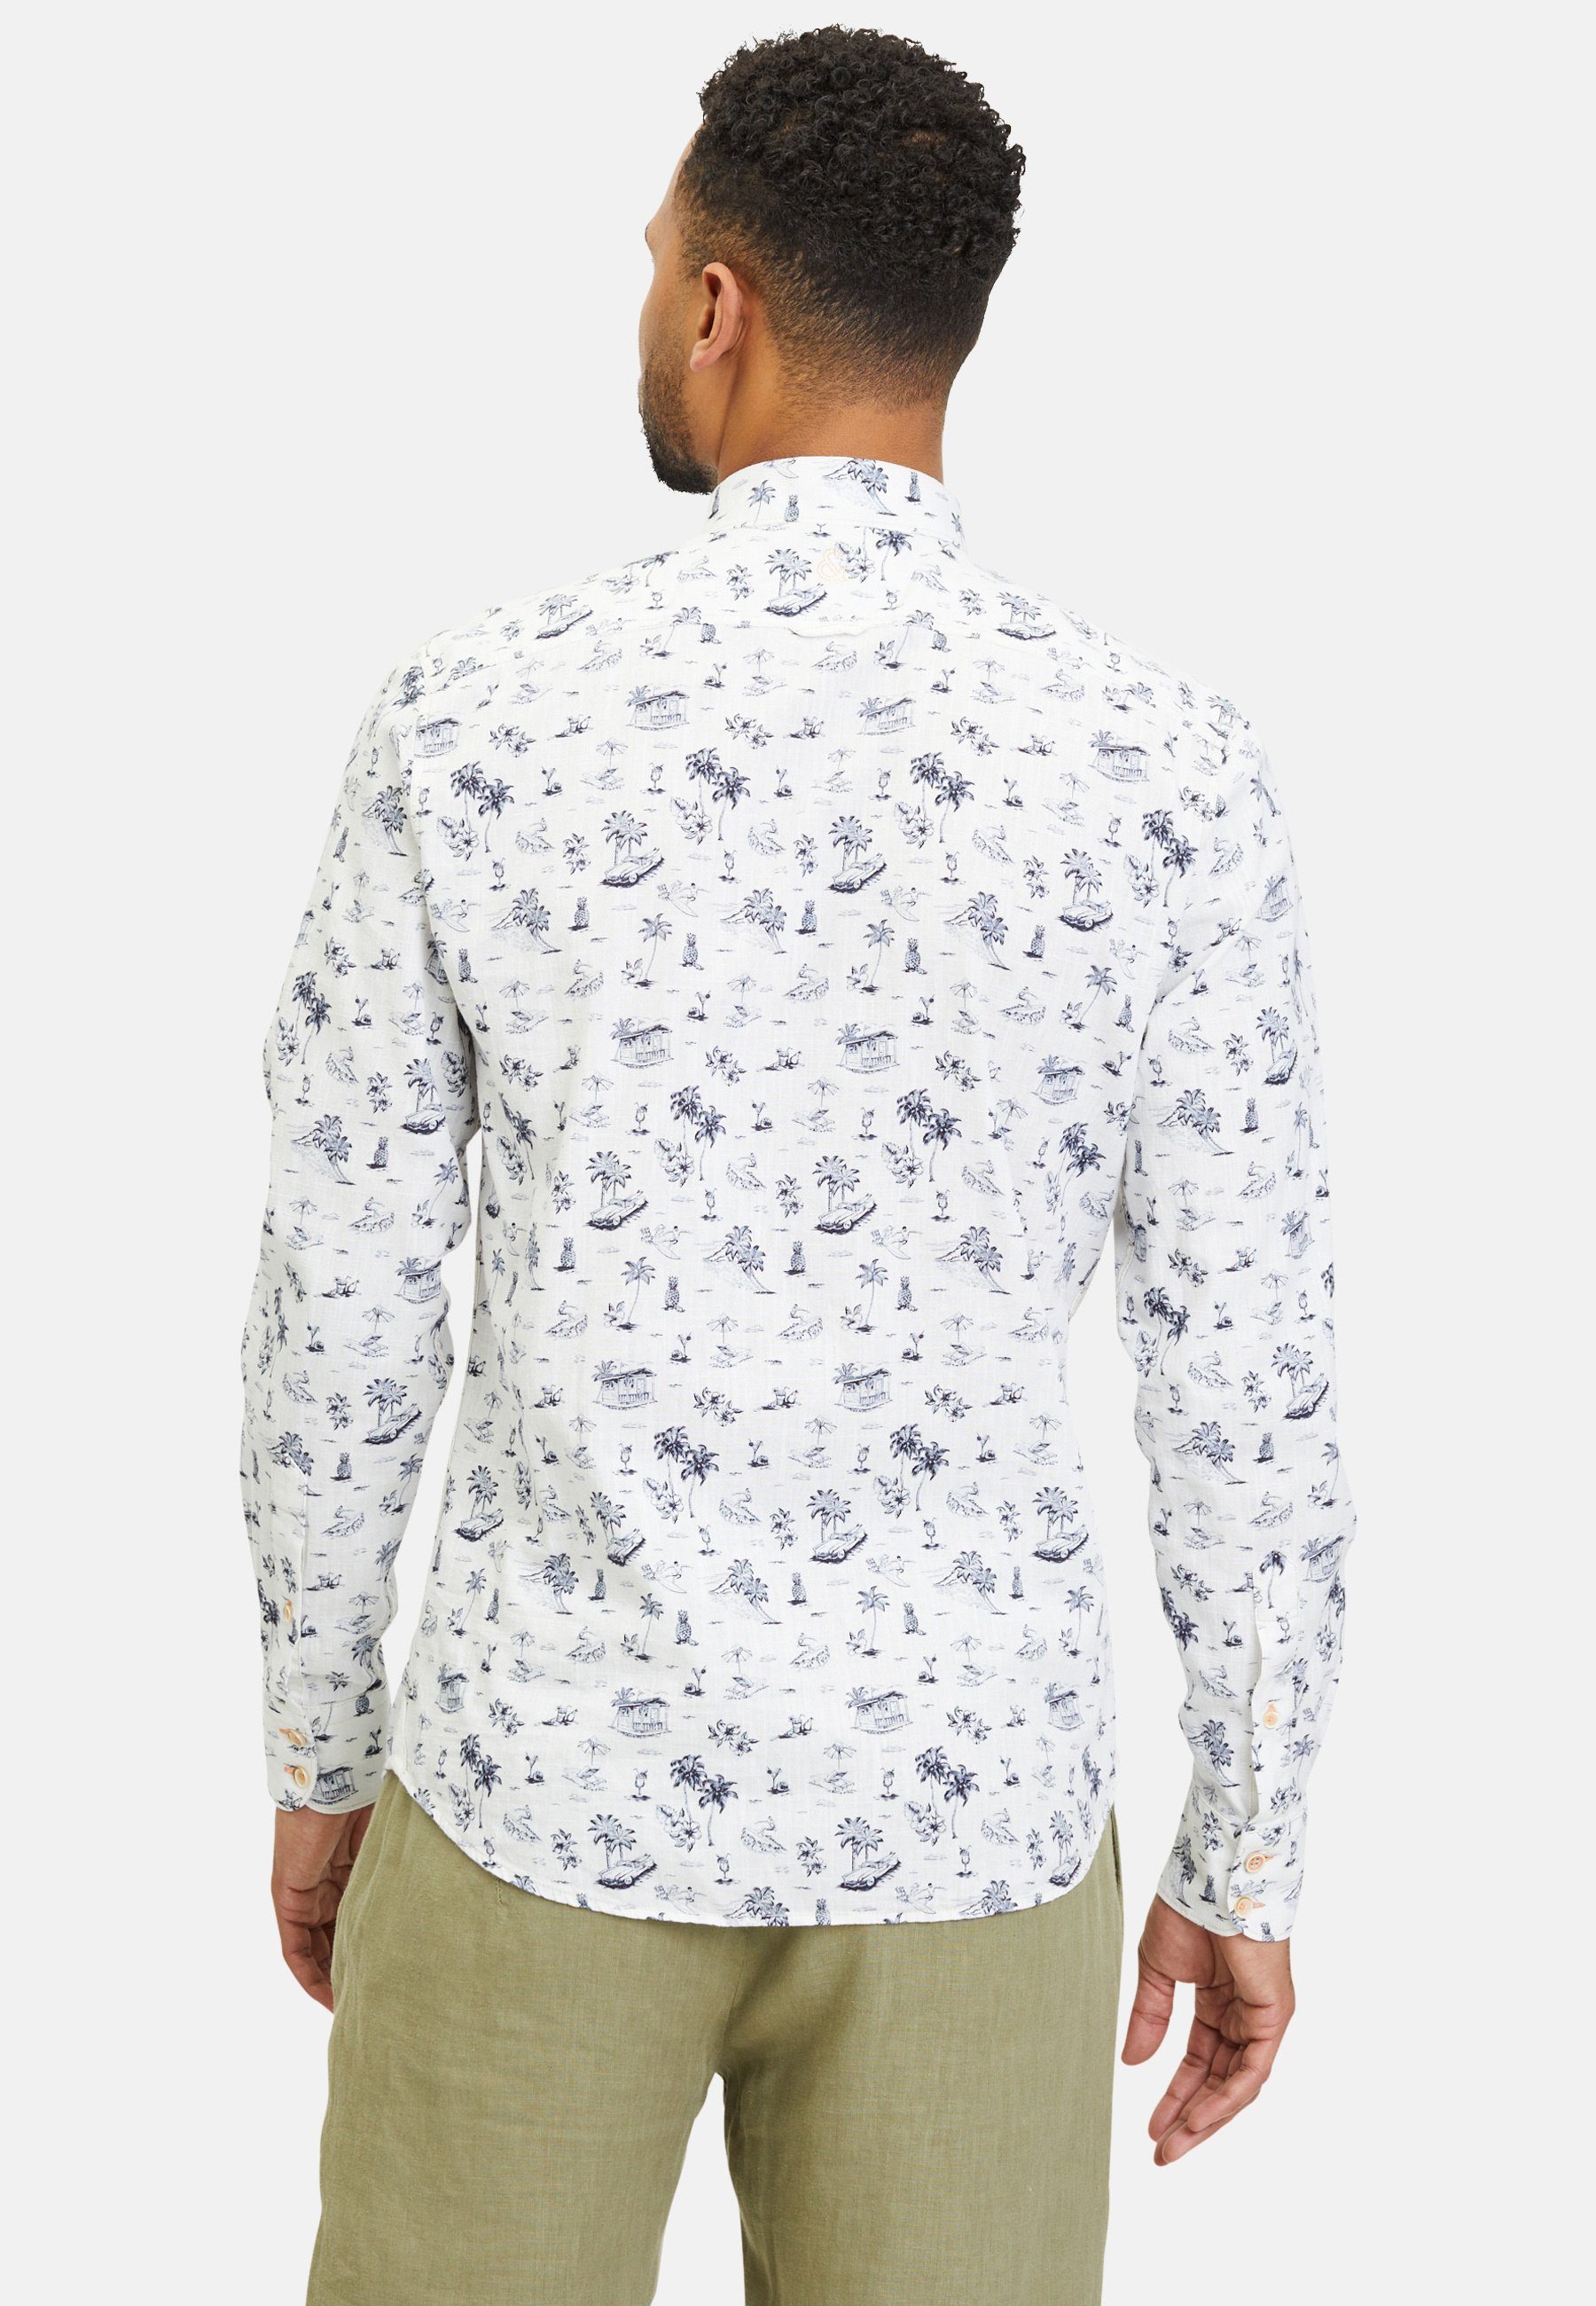 Baumwolle sons Langarmhemd mit Hemd 100% Print Beach & colours Knopfleiste,